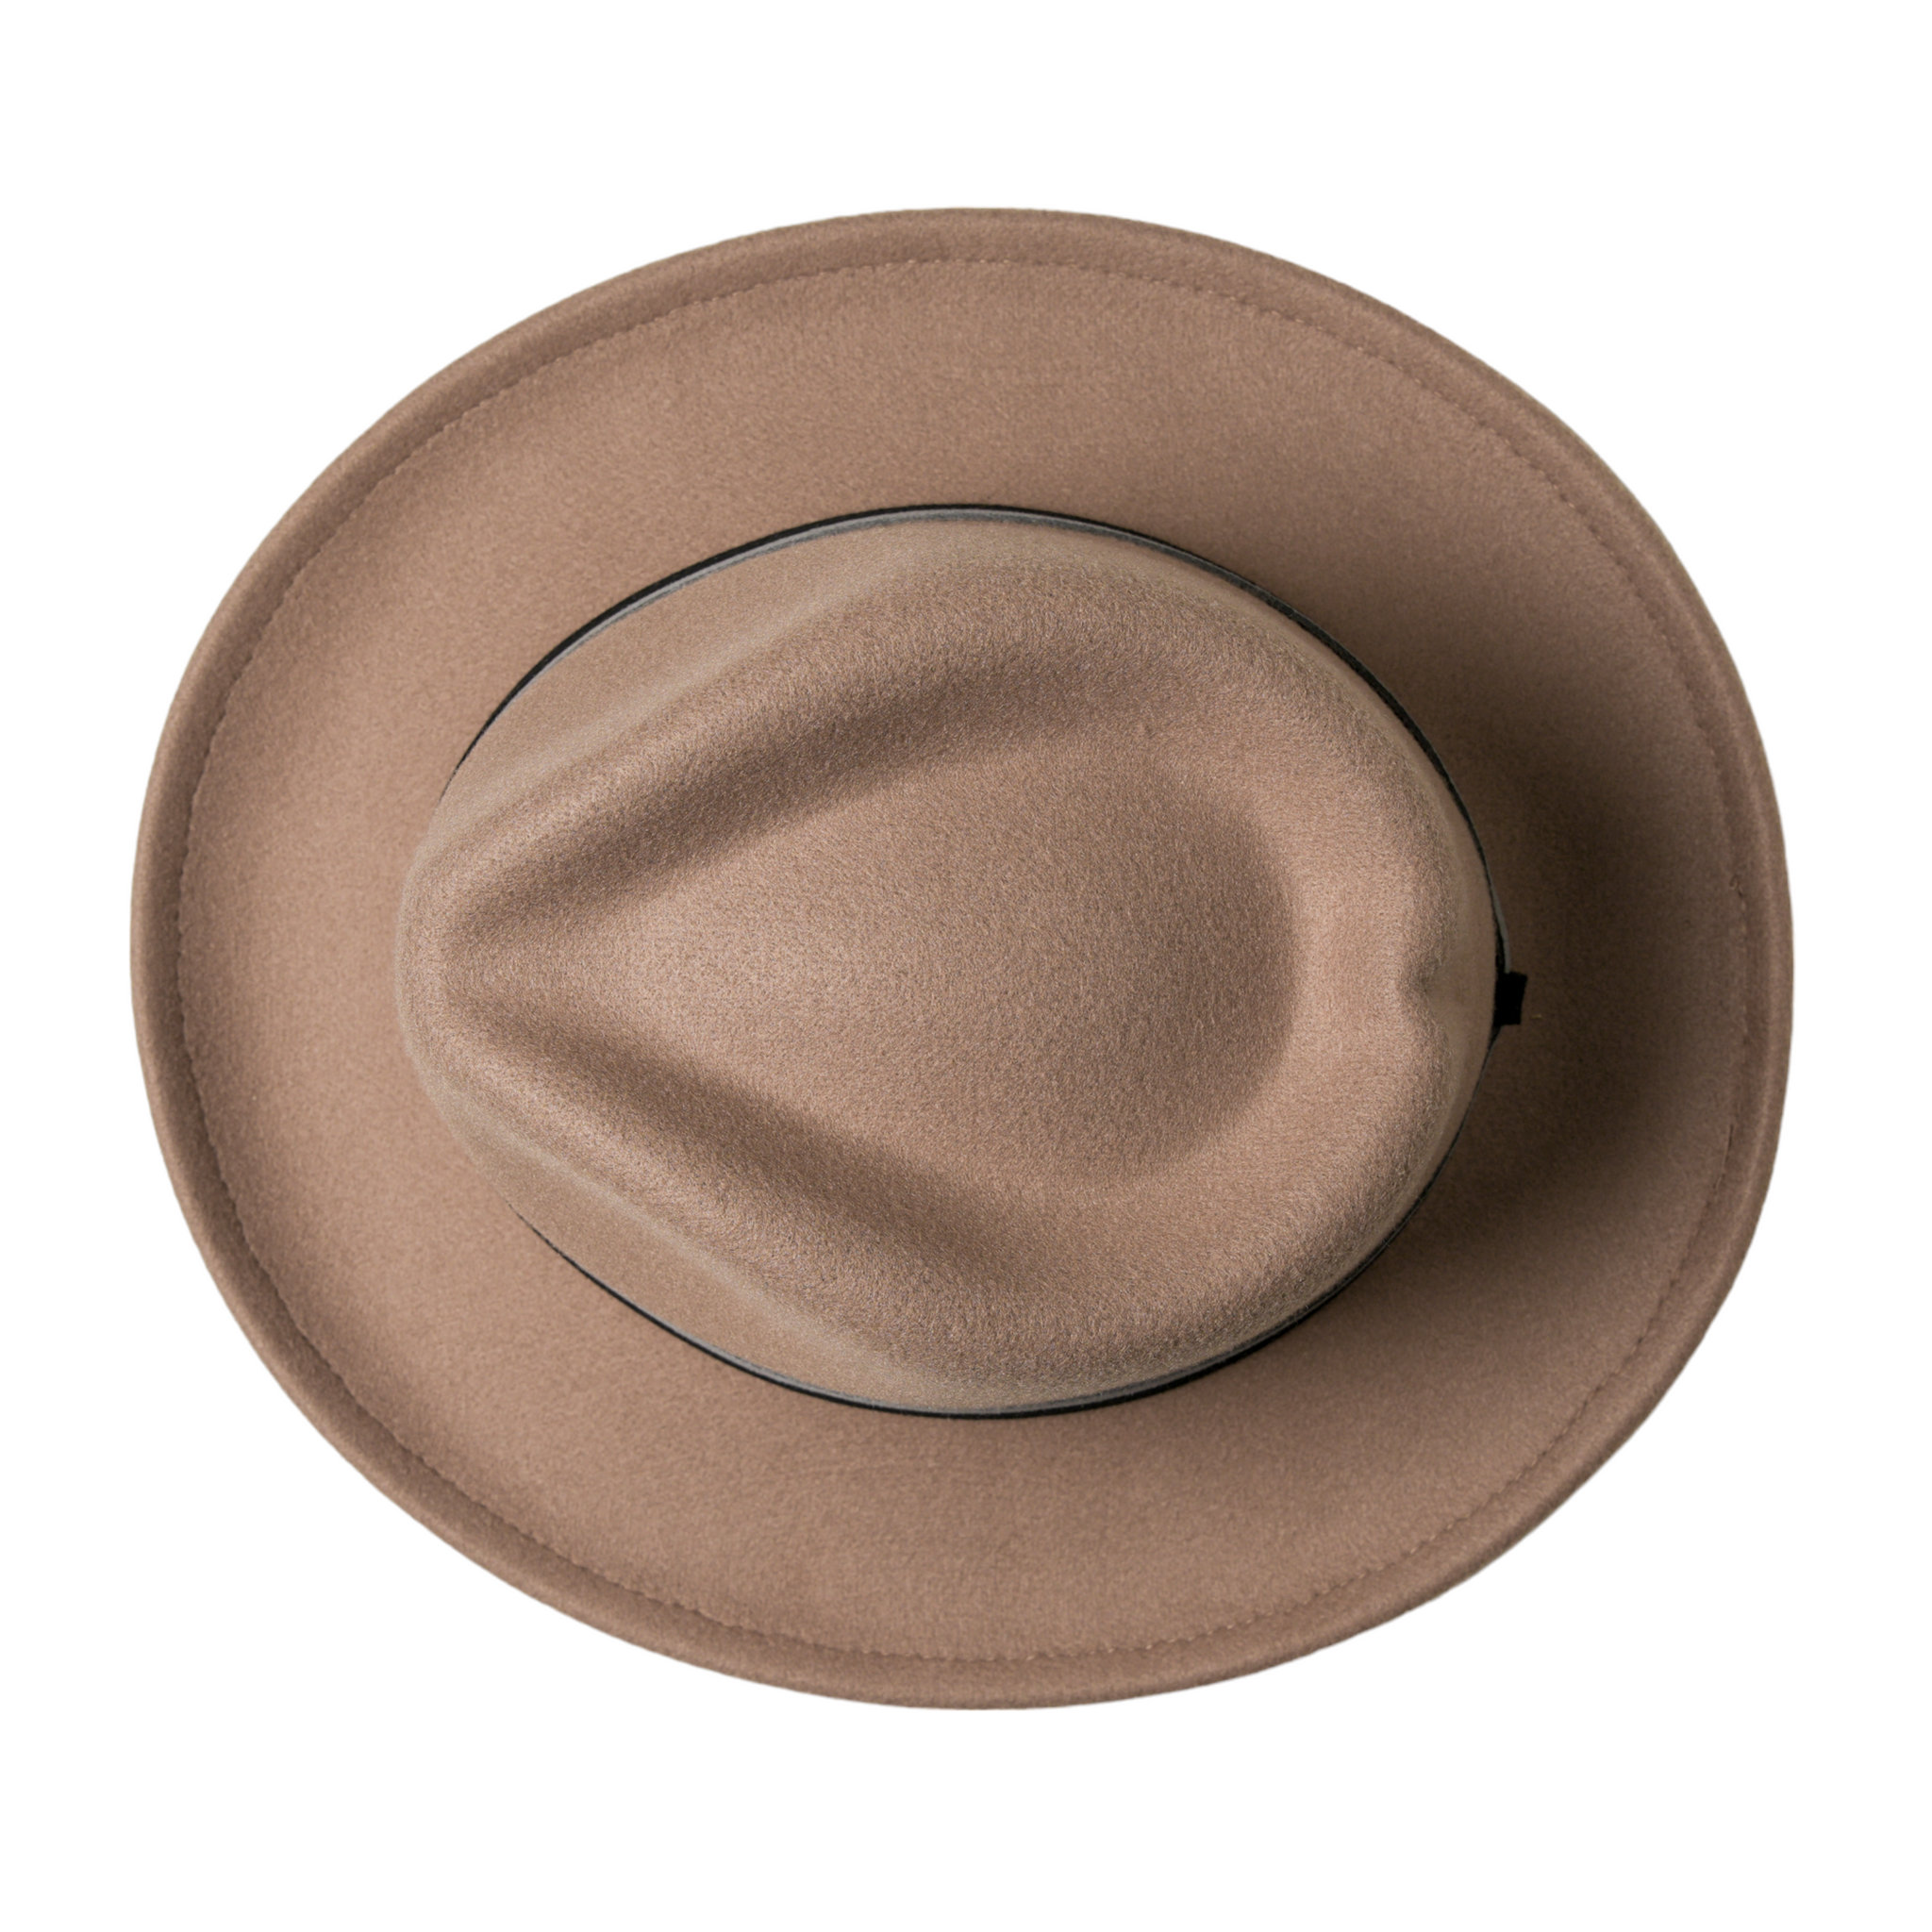 Chokore Fedora Hat with Dual Tone Band (Tan Brown)